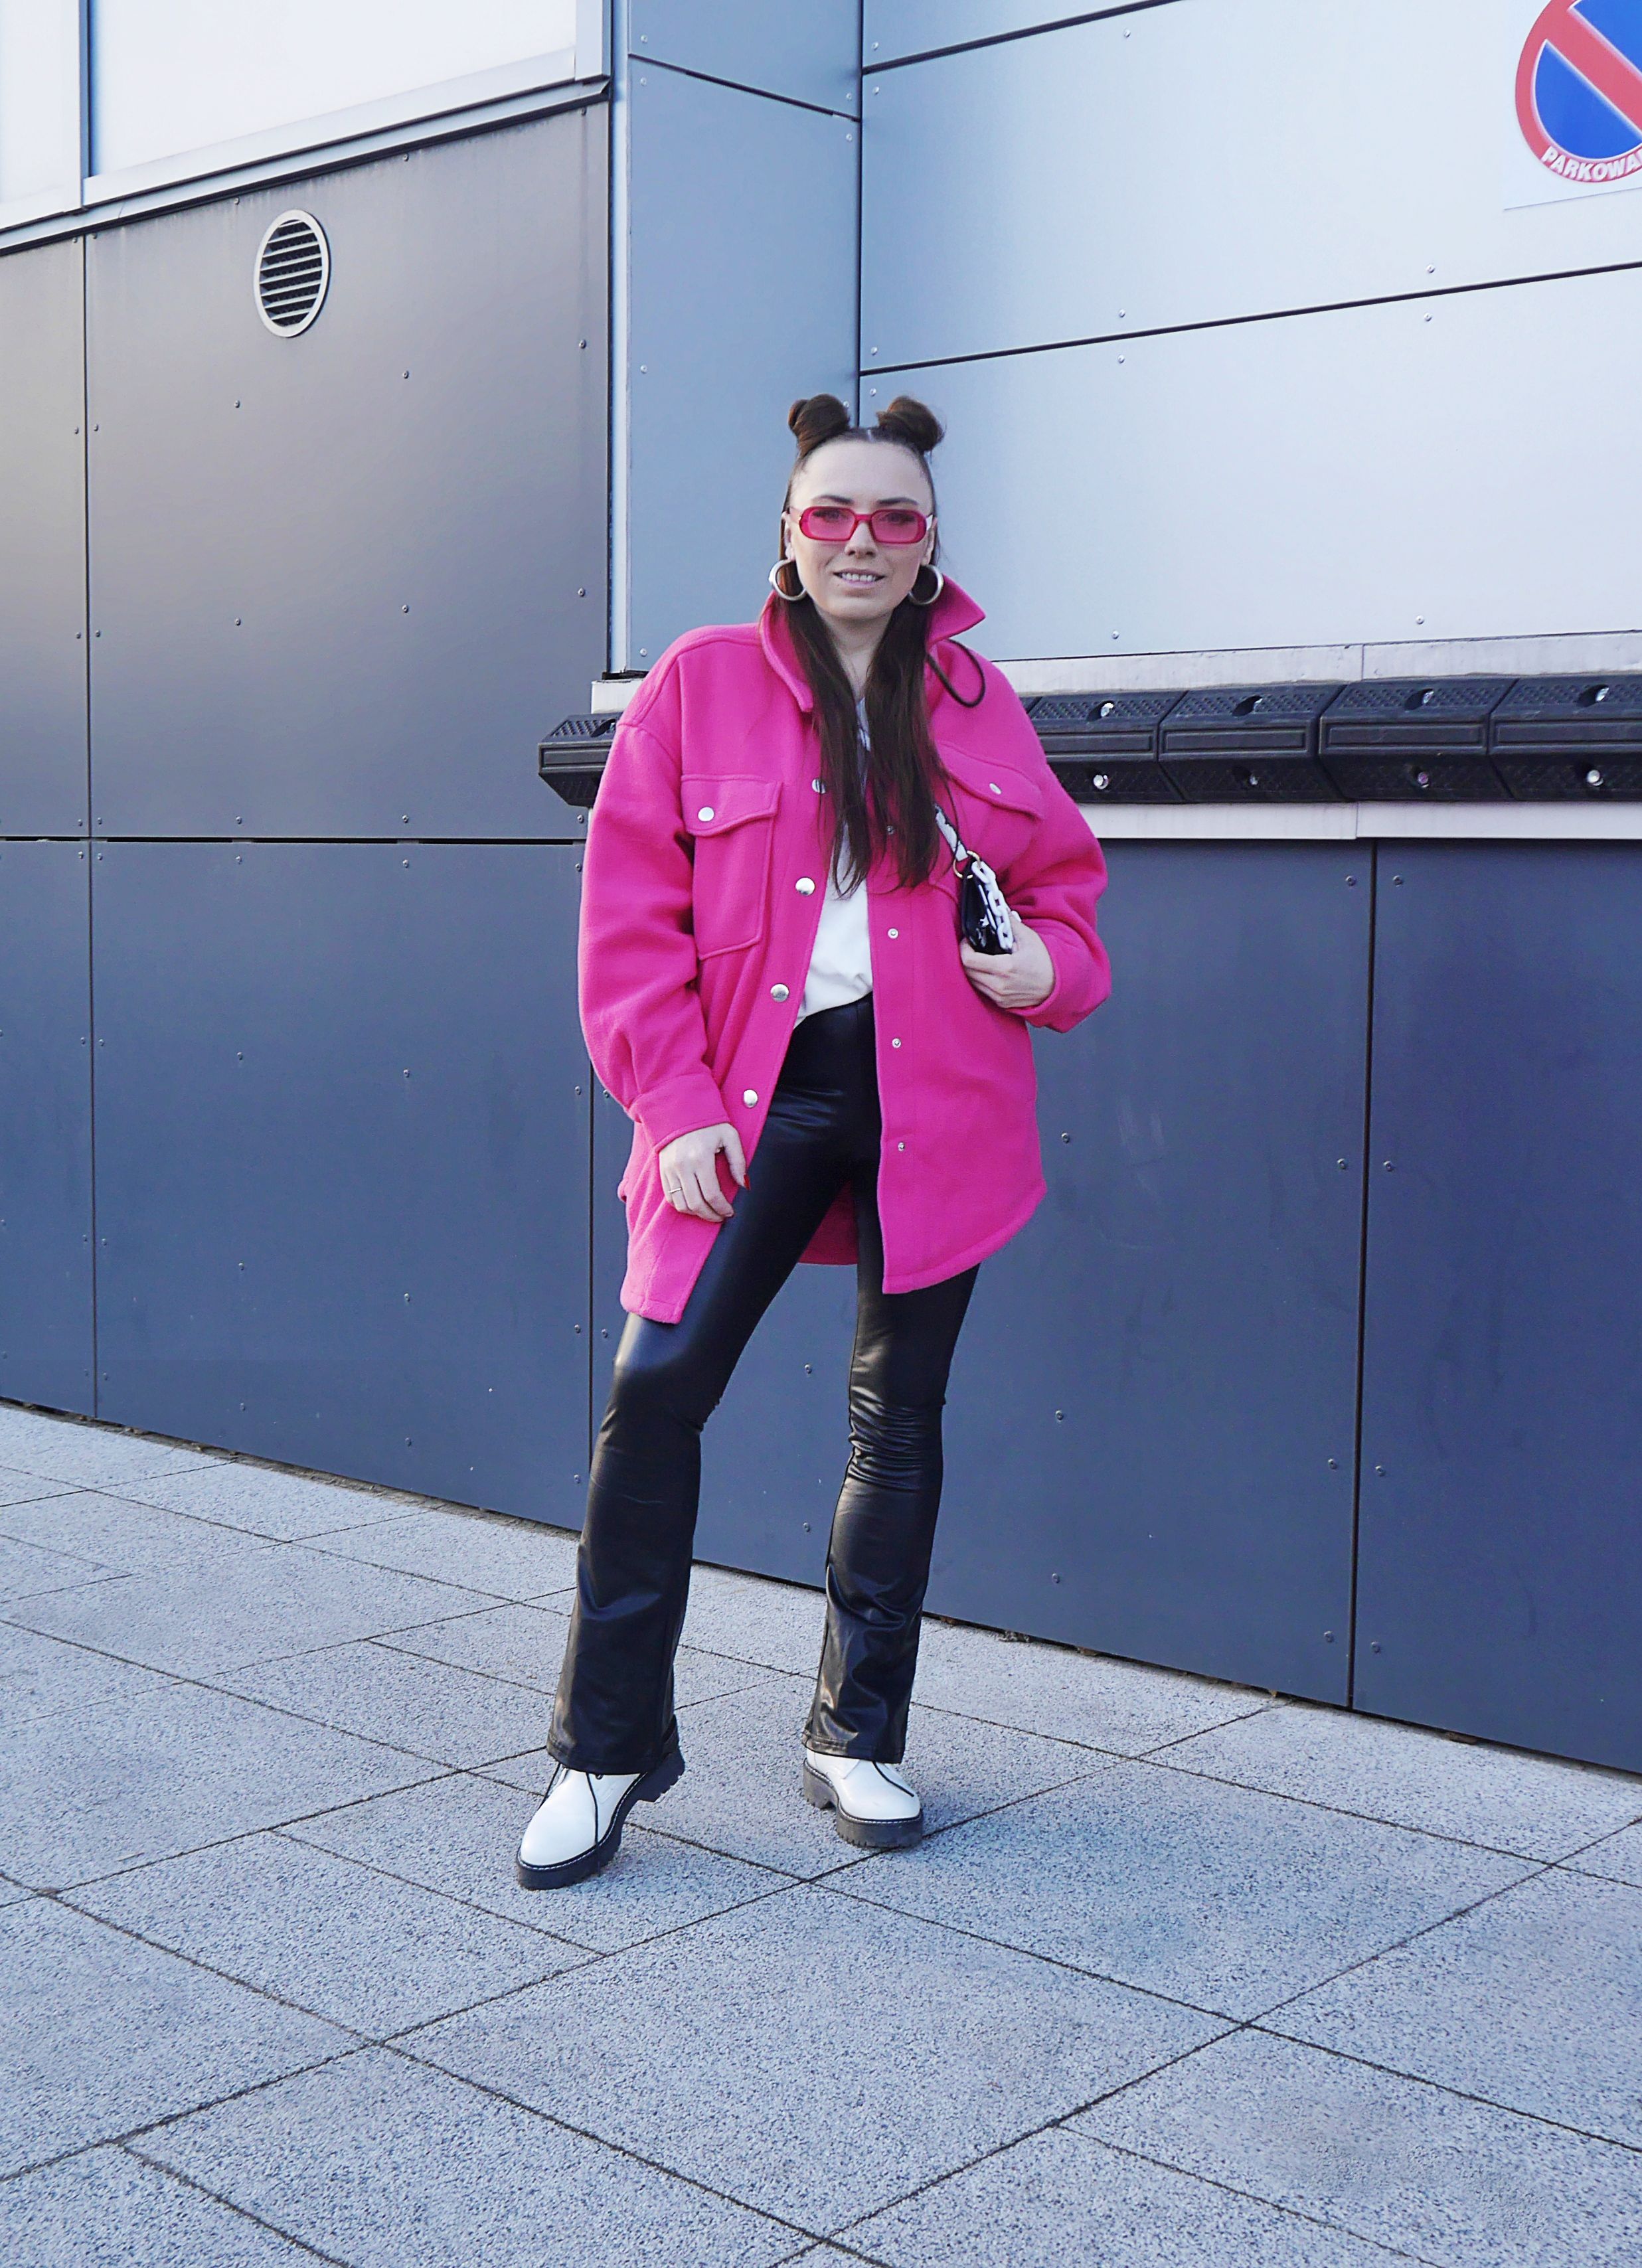 Fashion blogger pink jacket Shirt white biker boots white blouse pink sunglasses bonprix karyn ootd outfit look inspiration